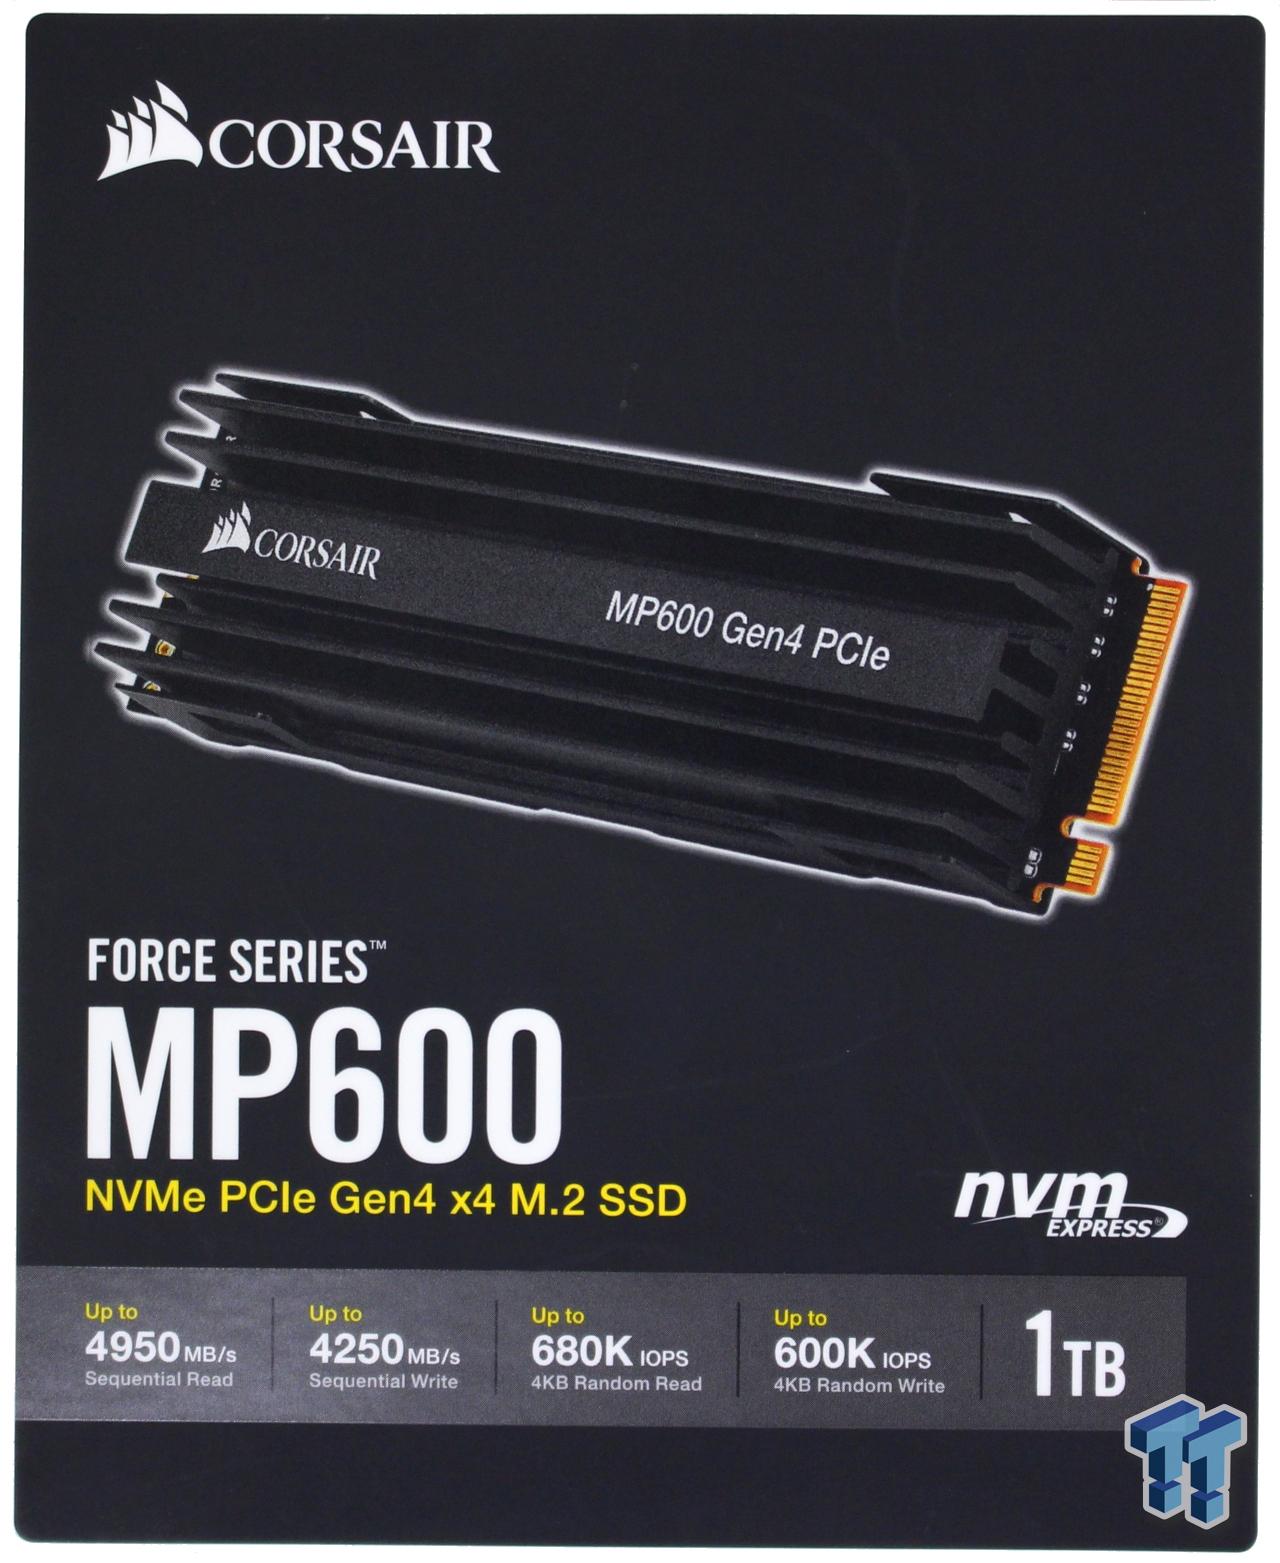 Idear Mareo Eliminación Corsair Force Series MP600 1TB NVMe PCIe Gen4 M.2 SSD Review